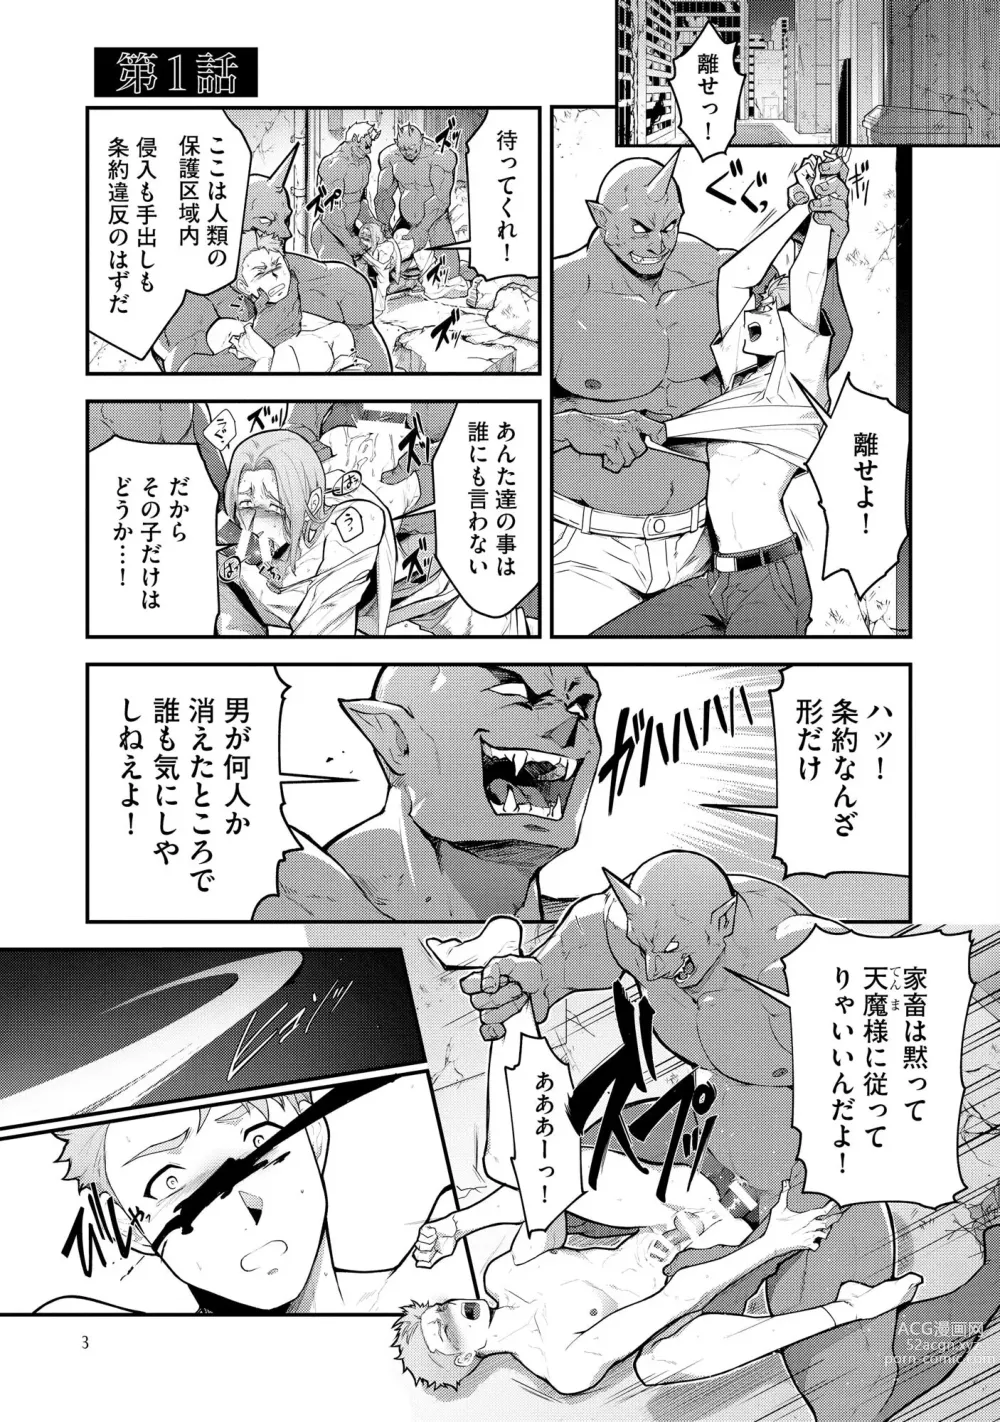 Page 7 of manga Haiboku Eiyuu, Ryoujoku